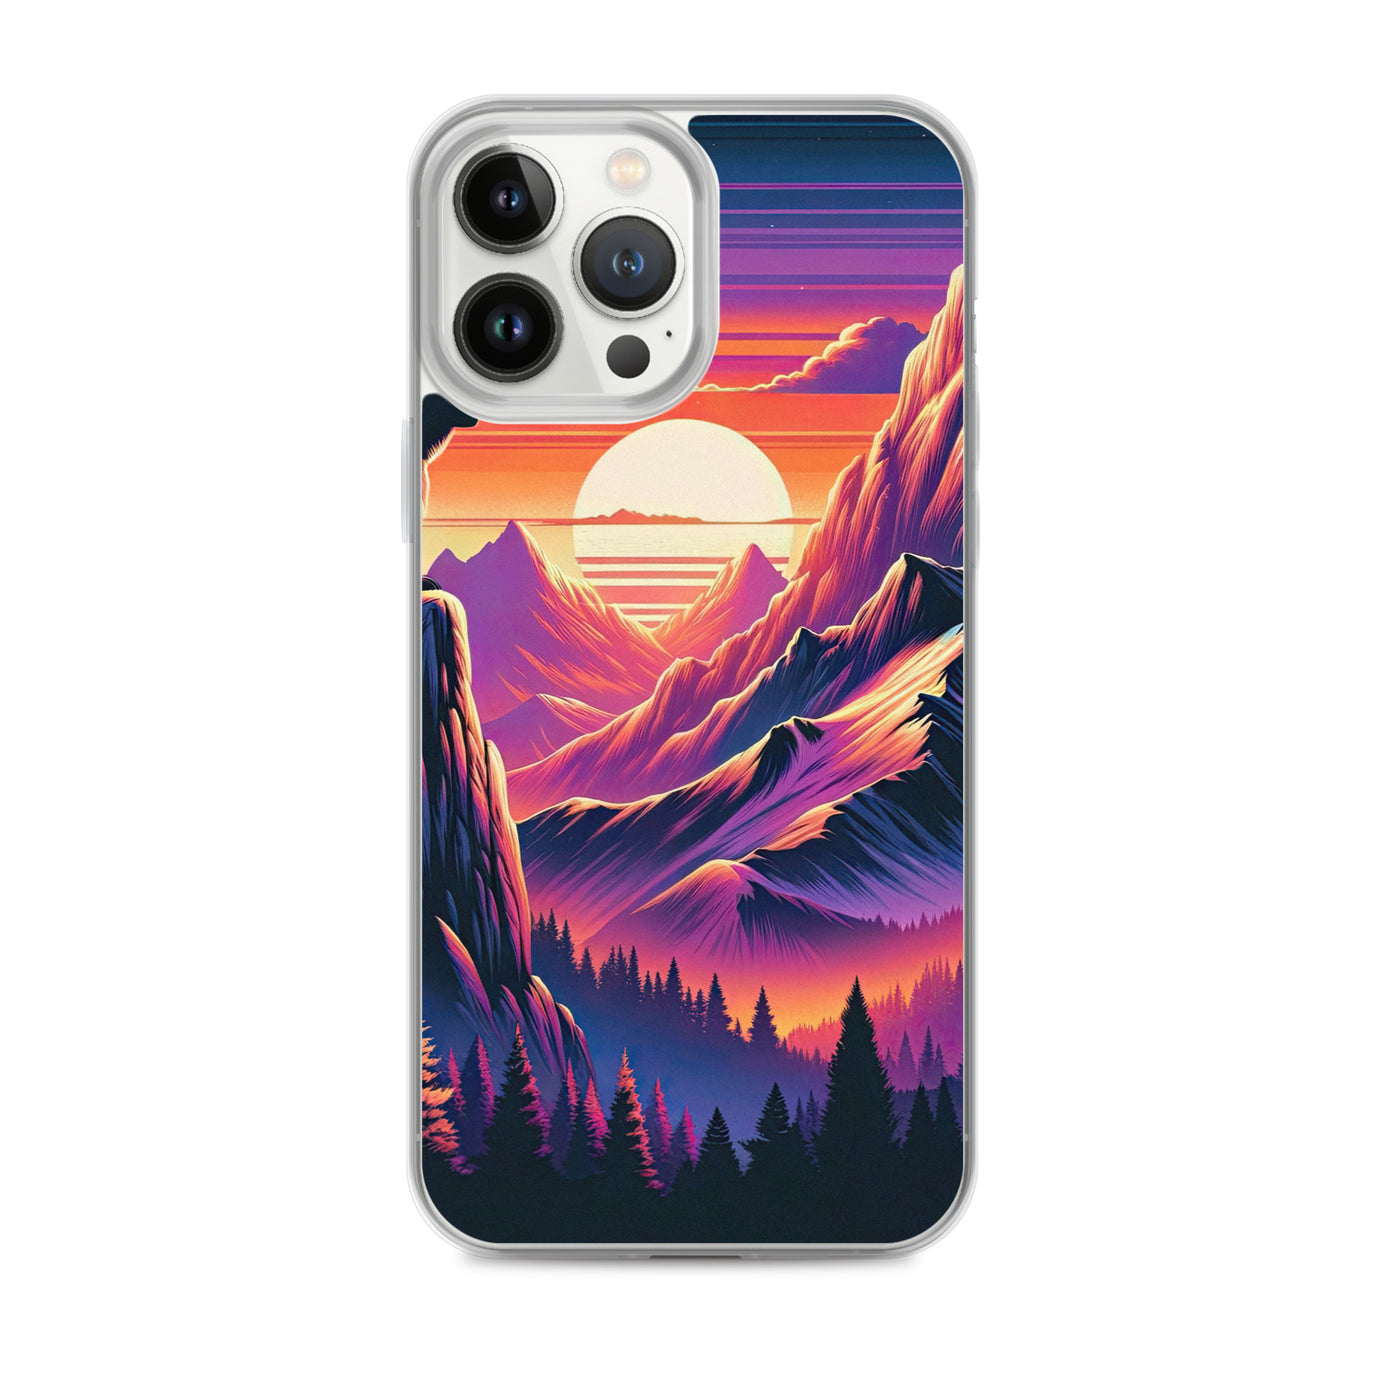 Alpen-Sonnenuntergang mit Bär auf Hügel, warmes Himmelsfarbenspiel - iPhone Schutzhülle (durchsichtig) camping xxx yyy zzz iPhone 13 Pro Max